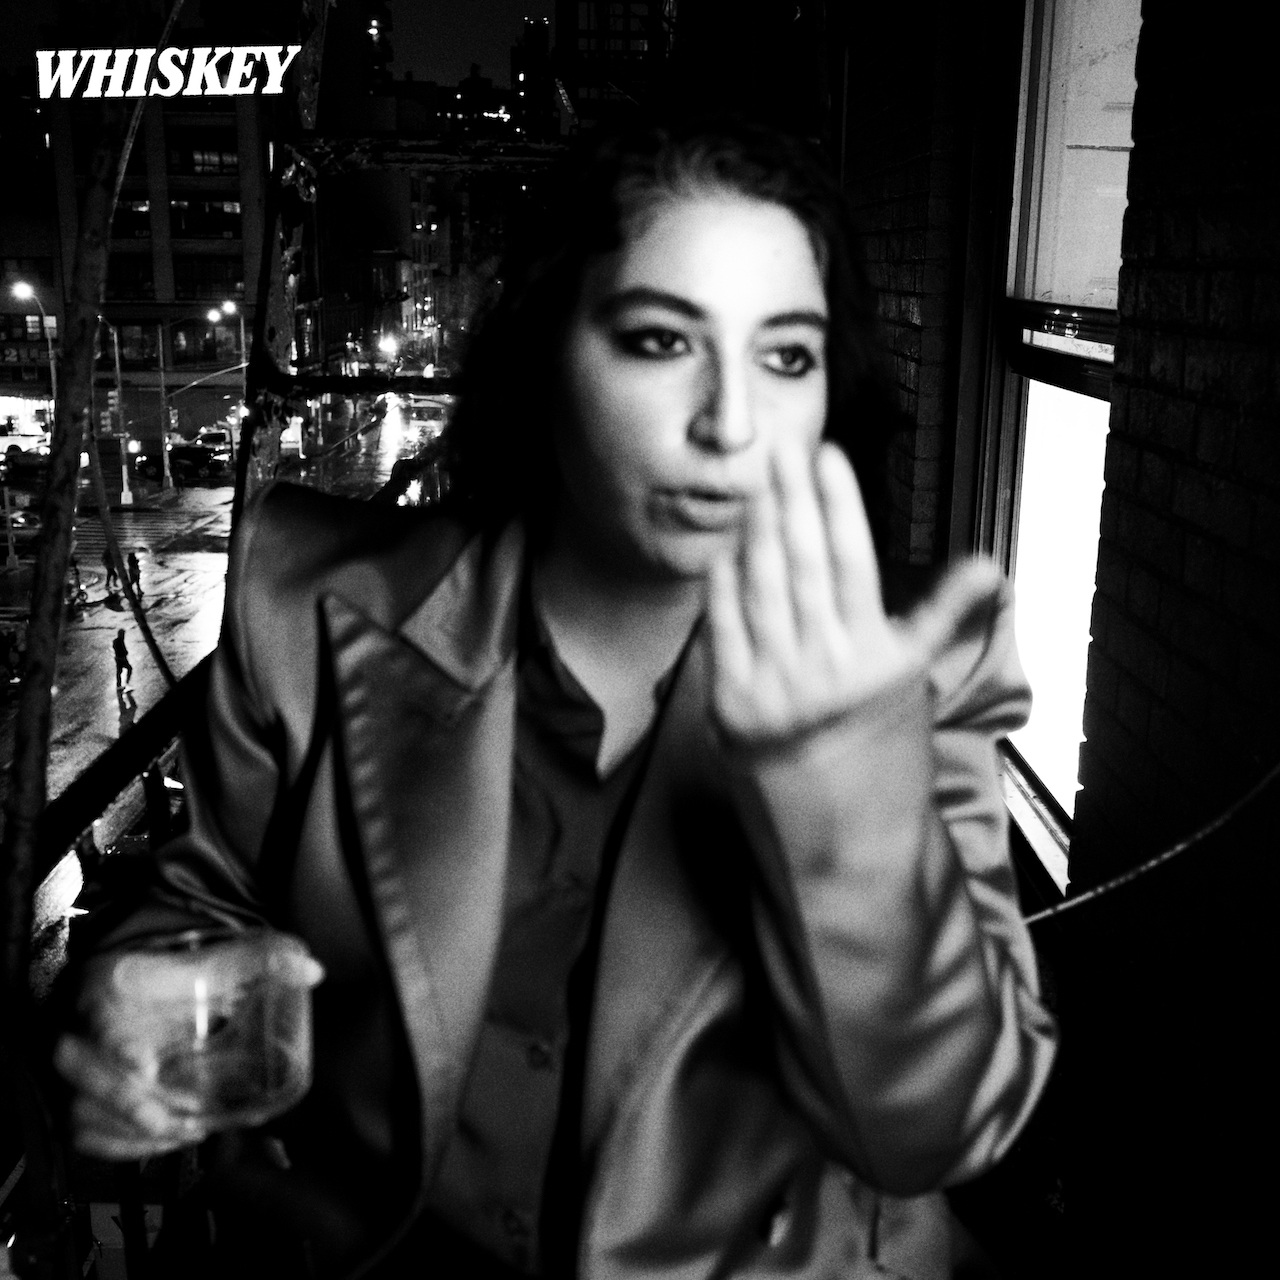 Arooj Aftab Shares Wistful New Single ‘Whiskey’